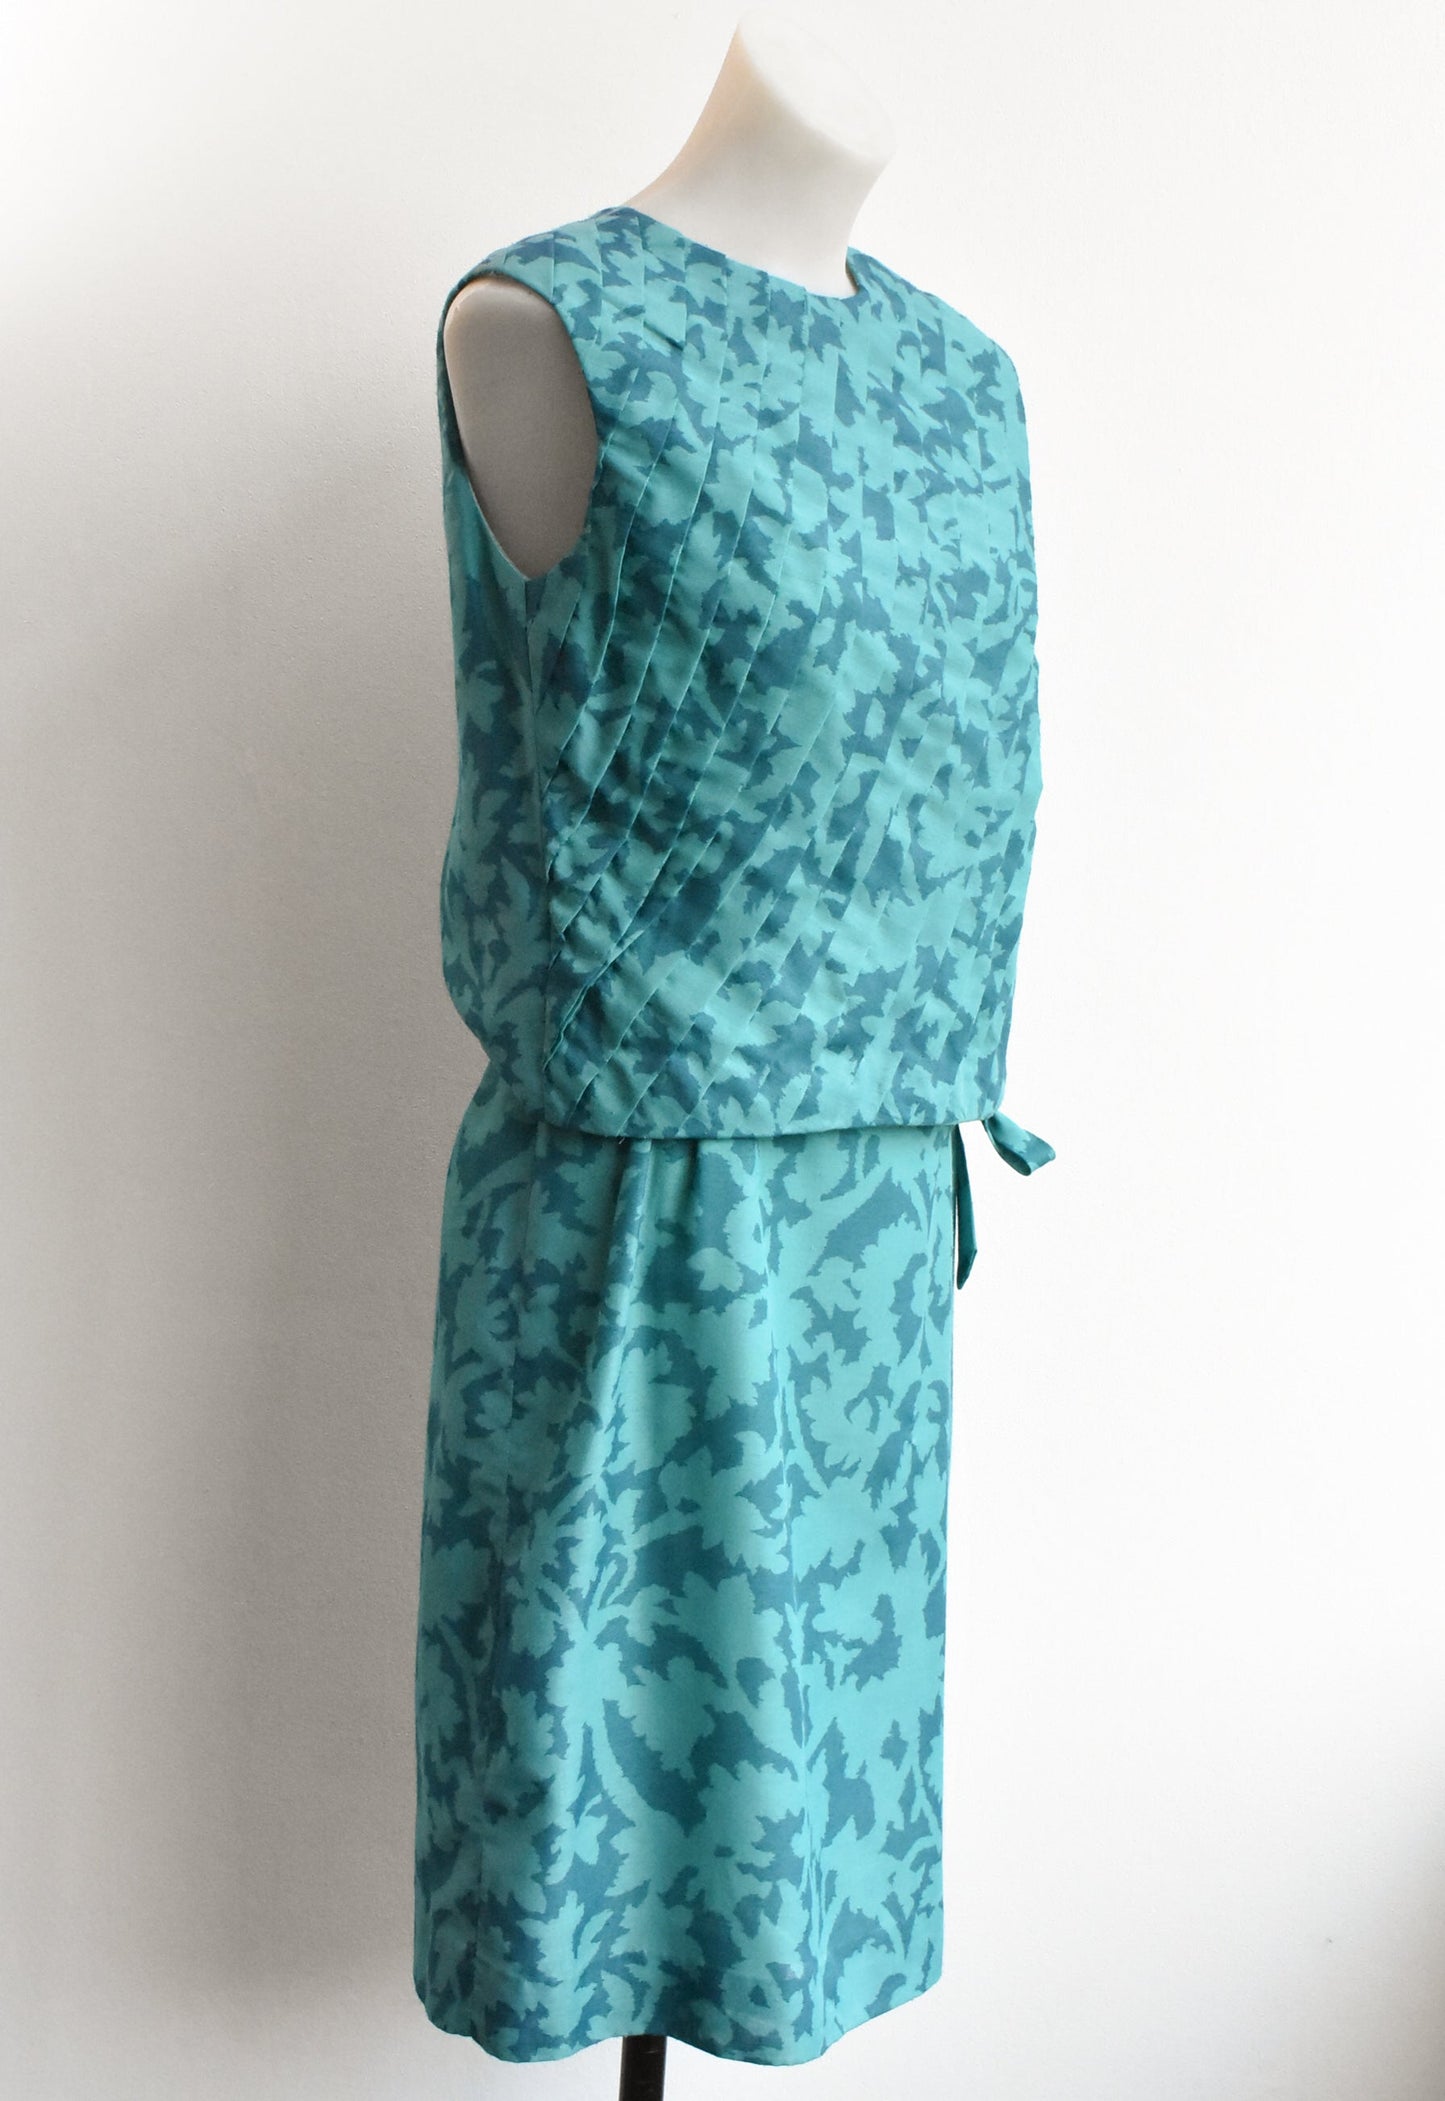 Peter Barron retro green sleeveless dress, size M